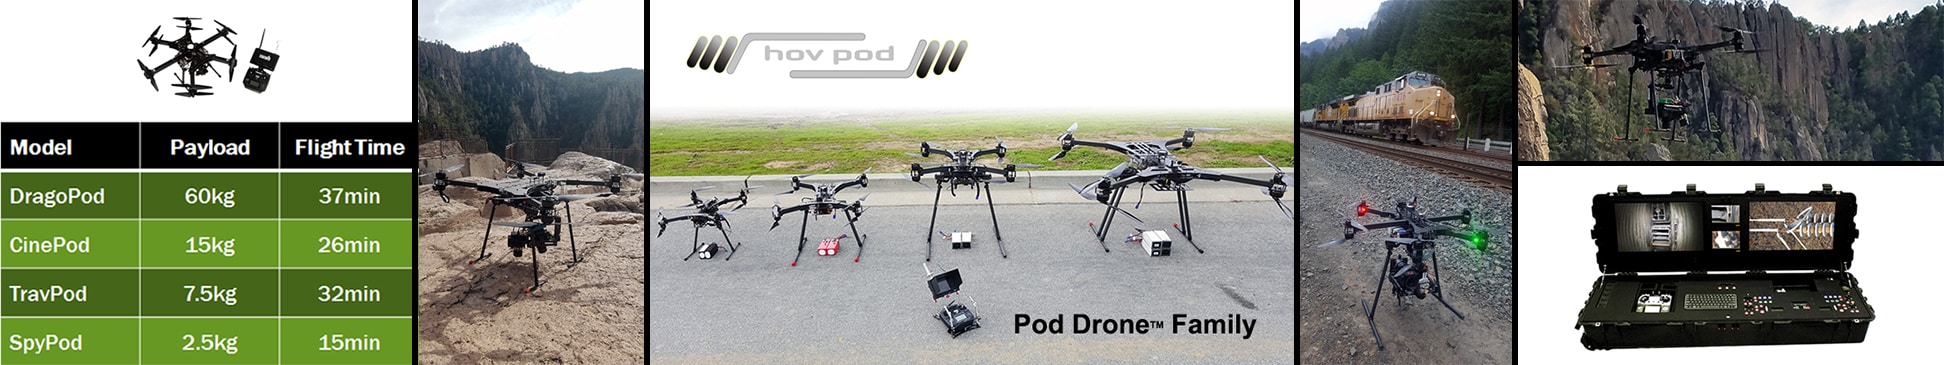 POD DRONE PLATFORM™ - HOV POD